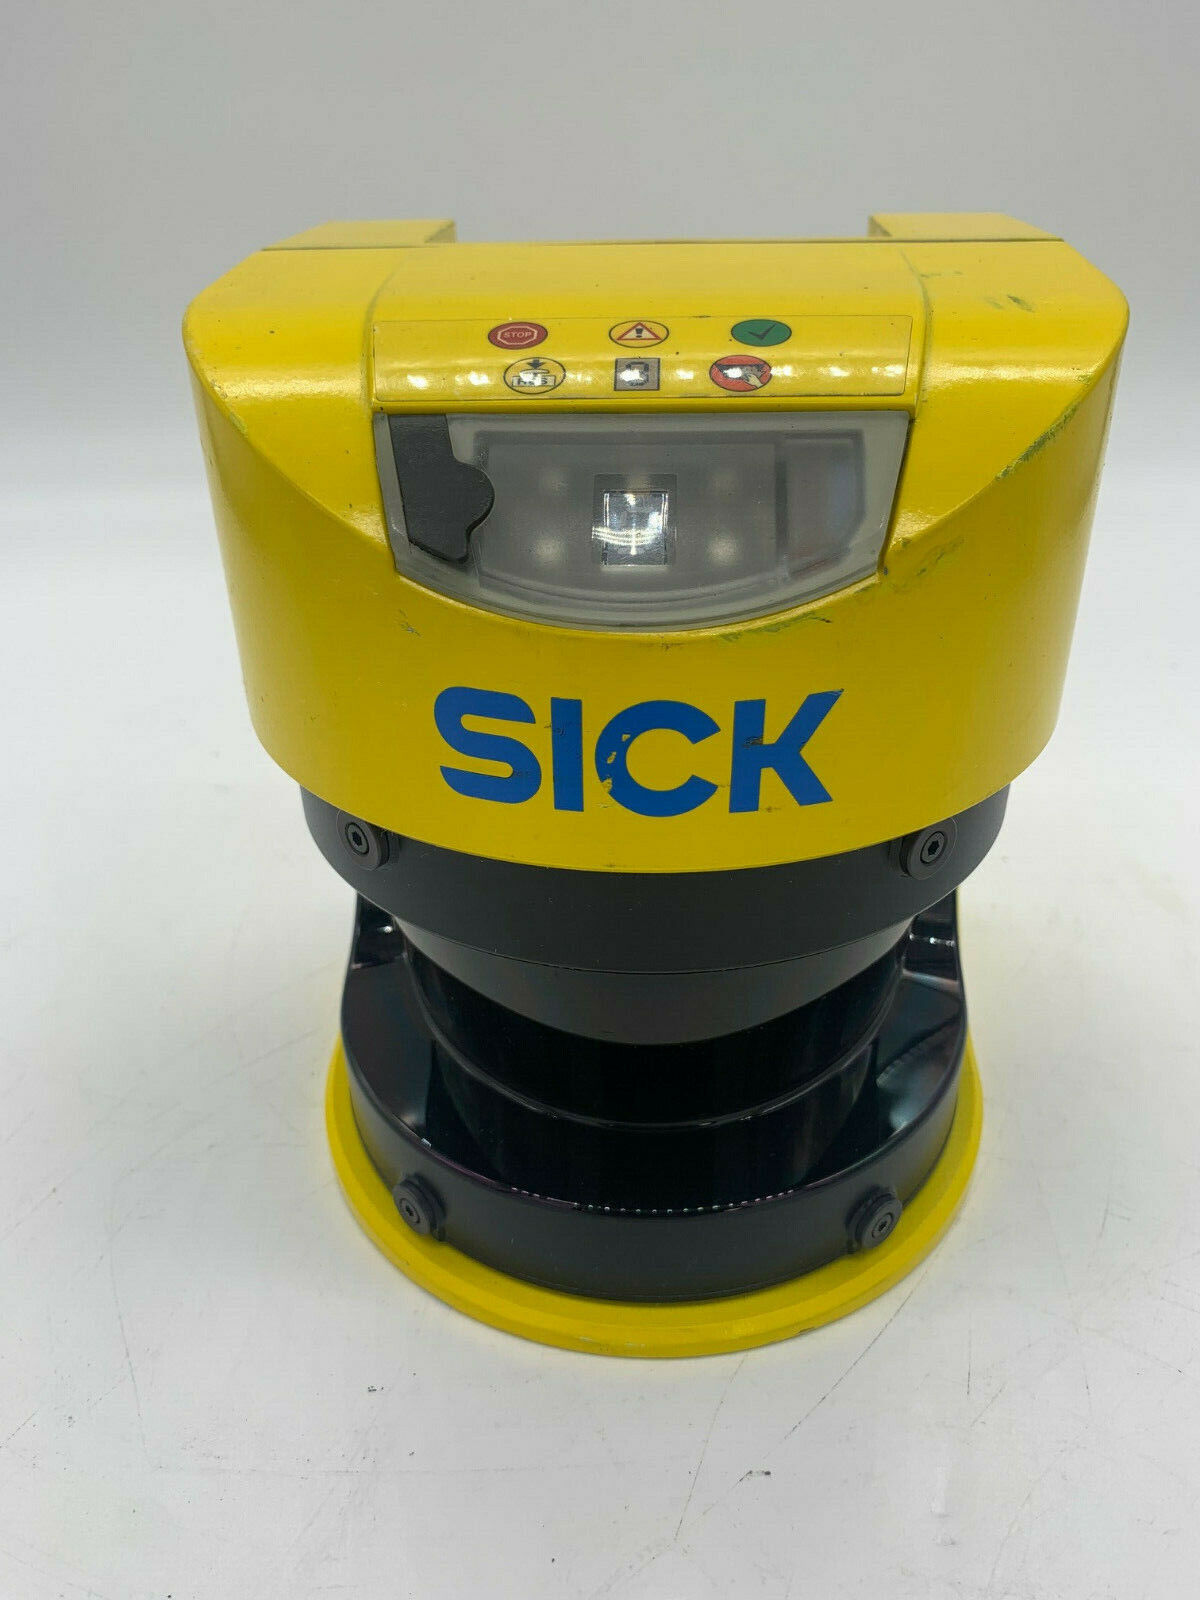 SICK S3000 S30A-6011DA 1019600 Safety Laser Scanner Includes 1-Year Warranty